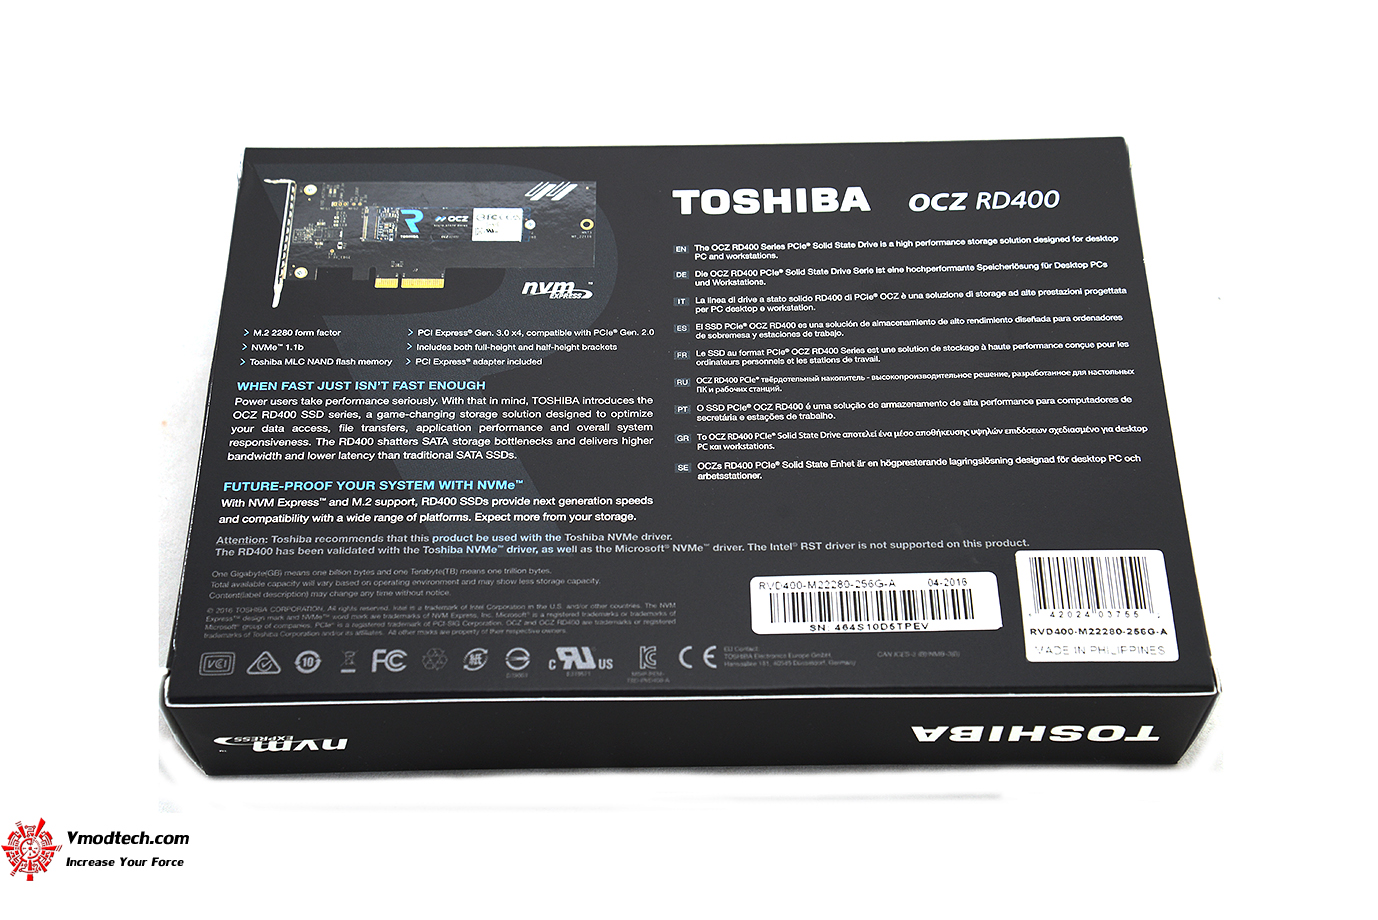 dsc 1809 Toshiba OCZ RD400 PCIe NVME SSD 256GB Review 